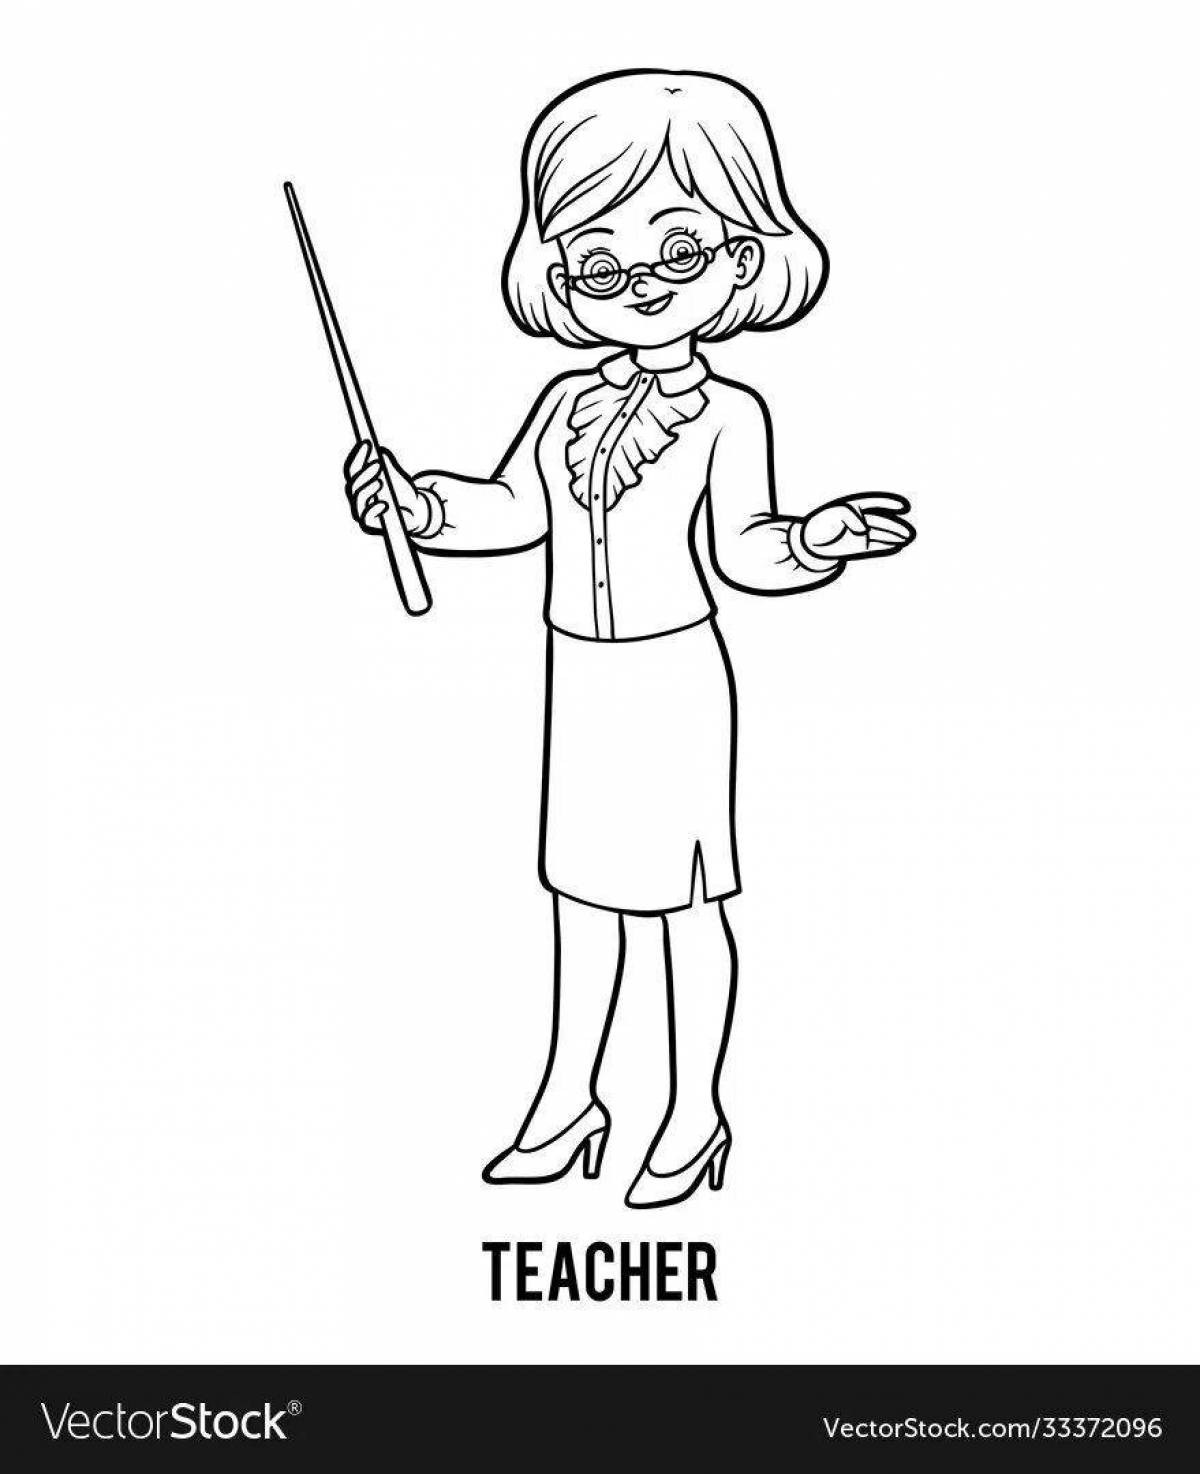 Cartoon teacher at the blackboard with a pointer